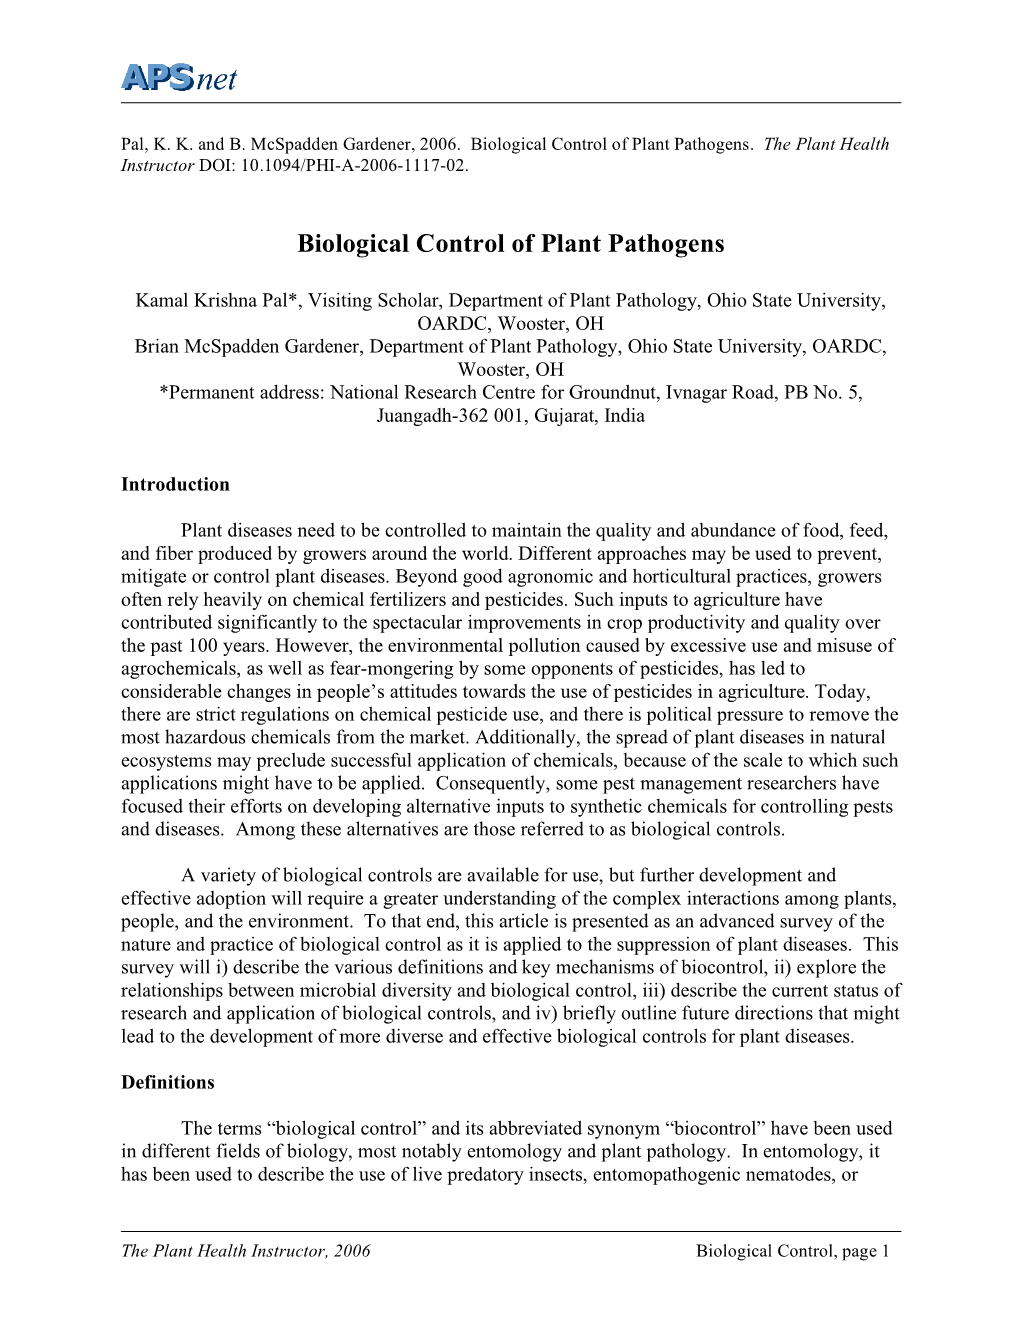 (2006) Biological Control of Plant Pathogens